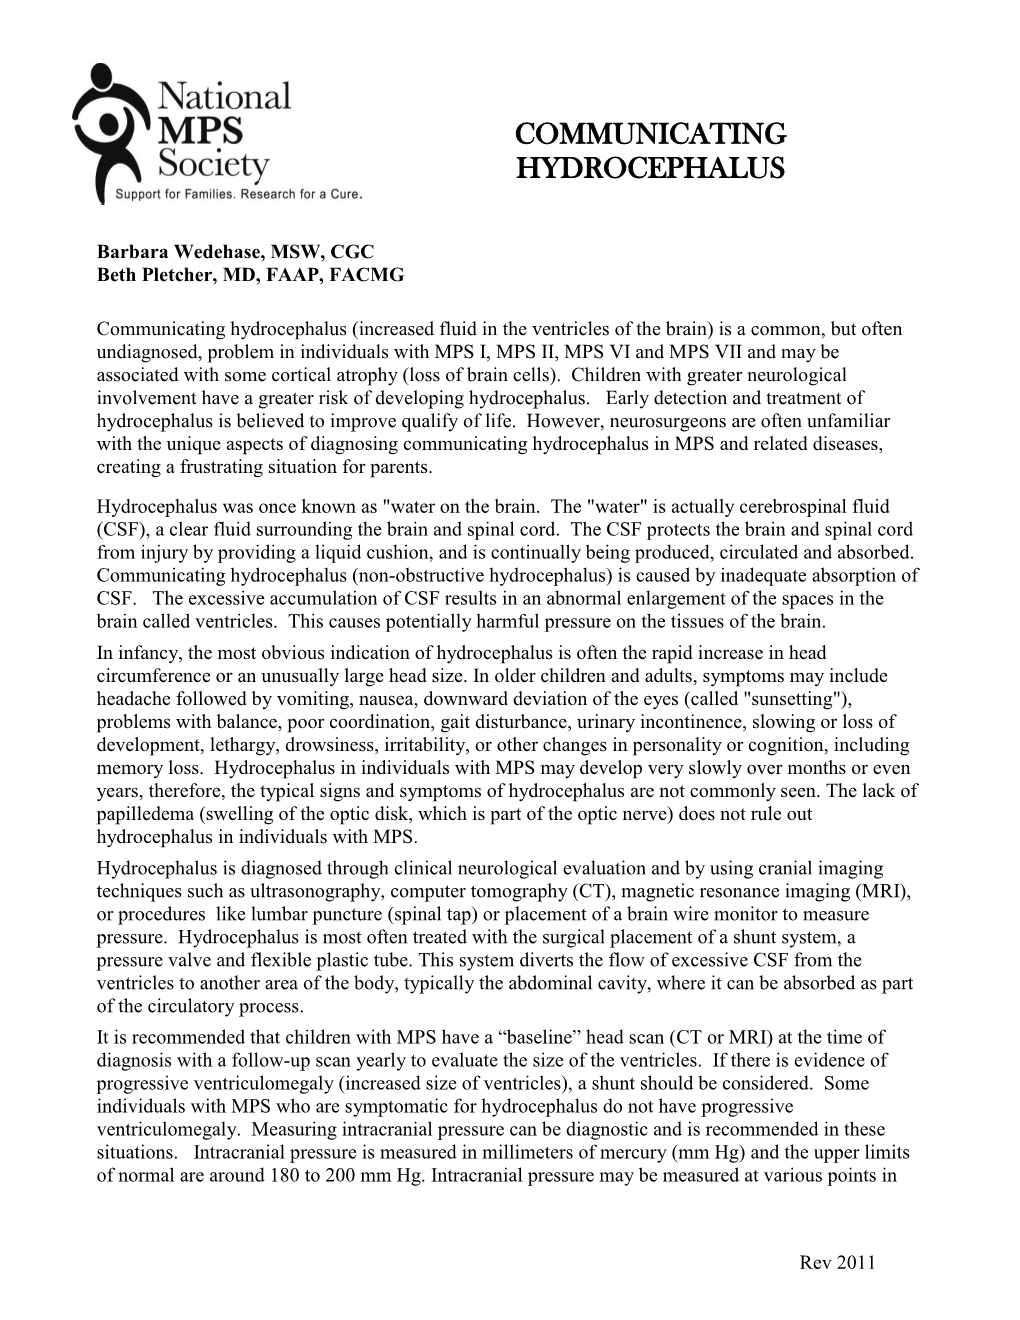 Communicating Hydrocephalus